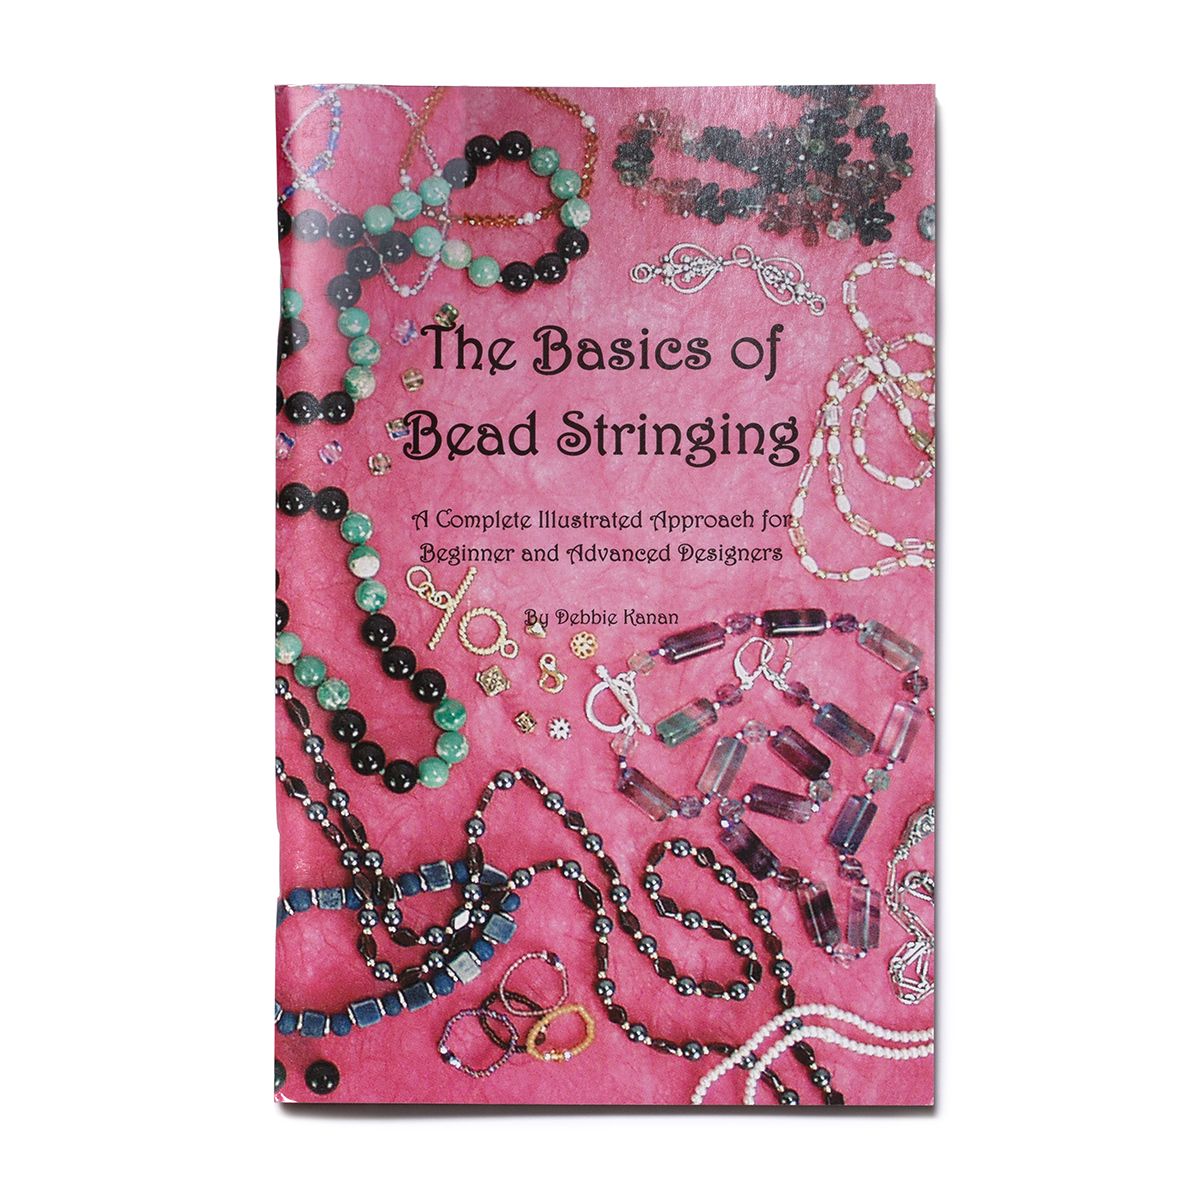 The Basics of Bead Stringing - Debbie Kanan